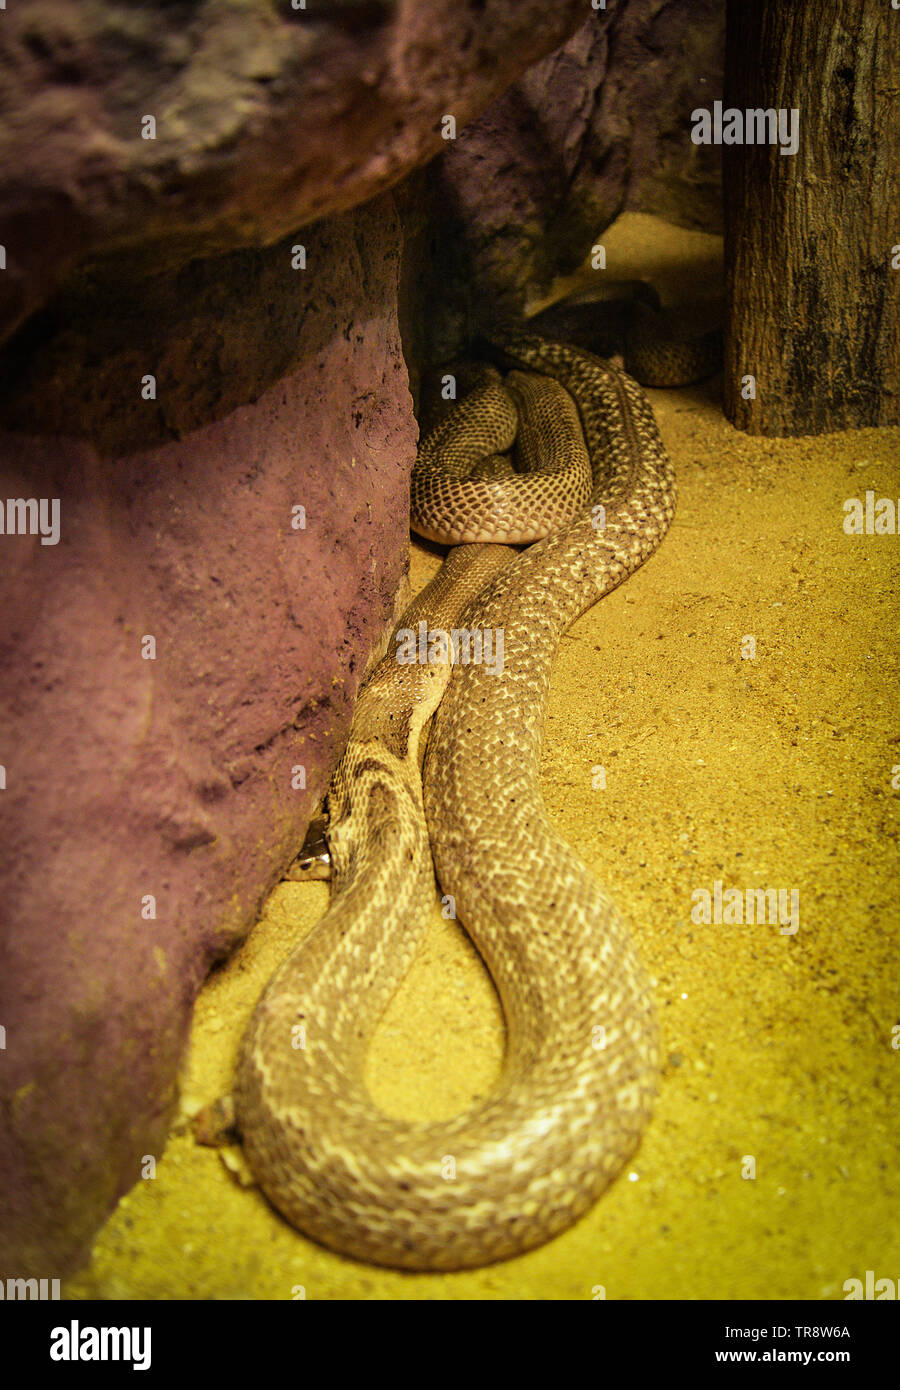 Indochinese or monocellate cobra lying on ground / Snake Naja kaouthia Stock Photo